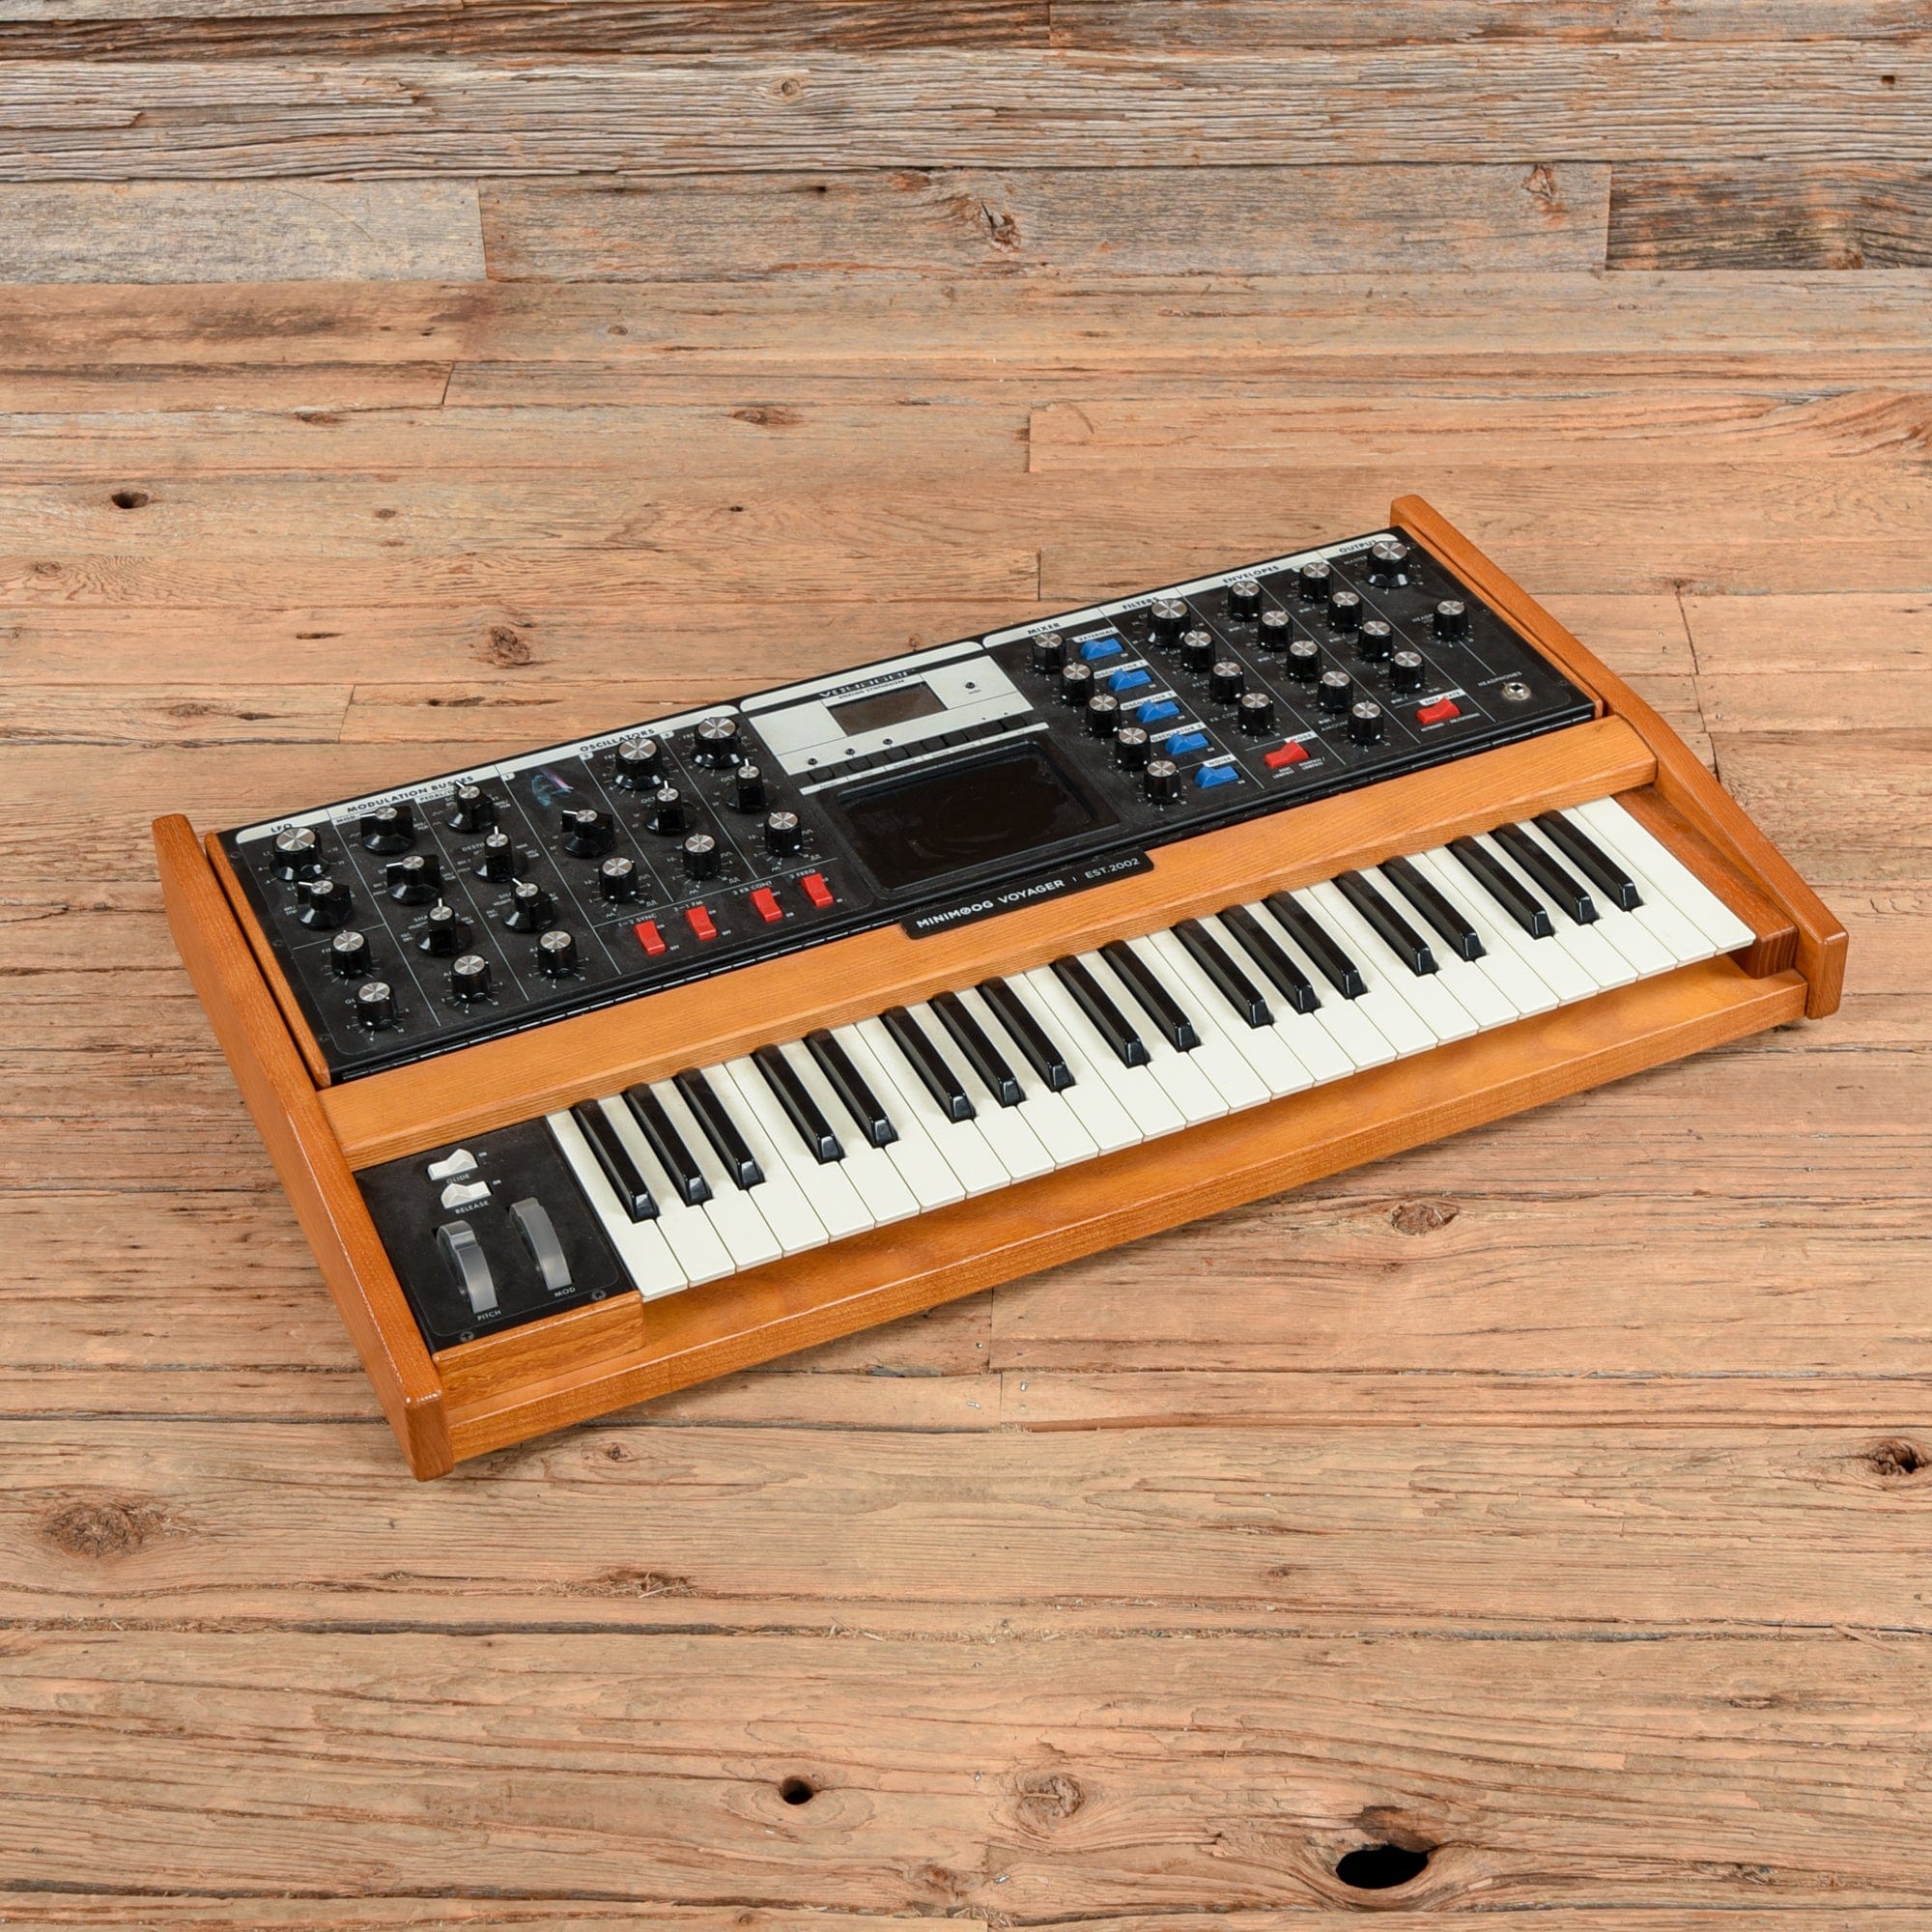 Moog Minimoog Voyager Performer Edition 44-Key Monophonic Synthesizer